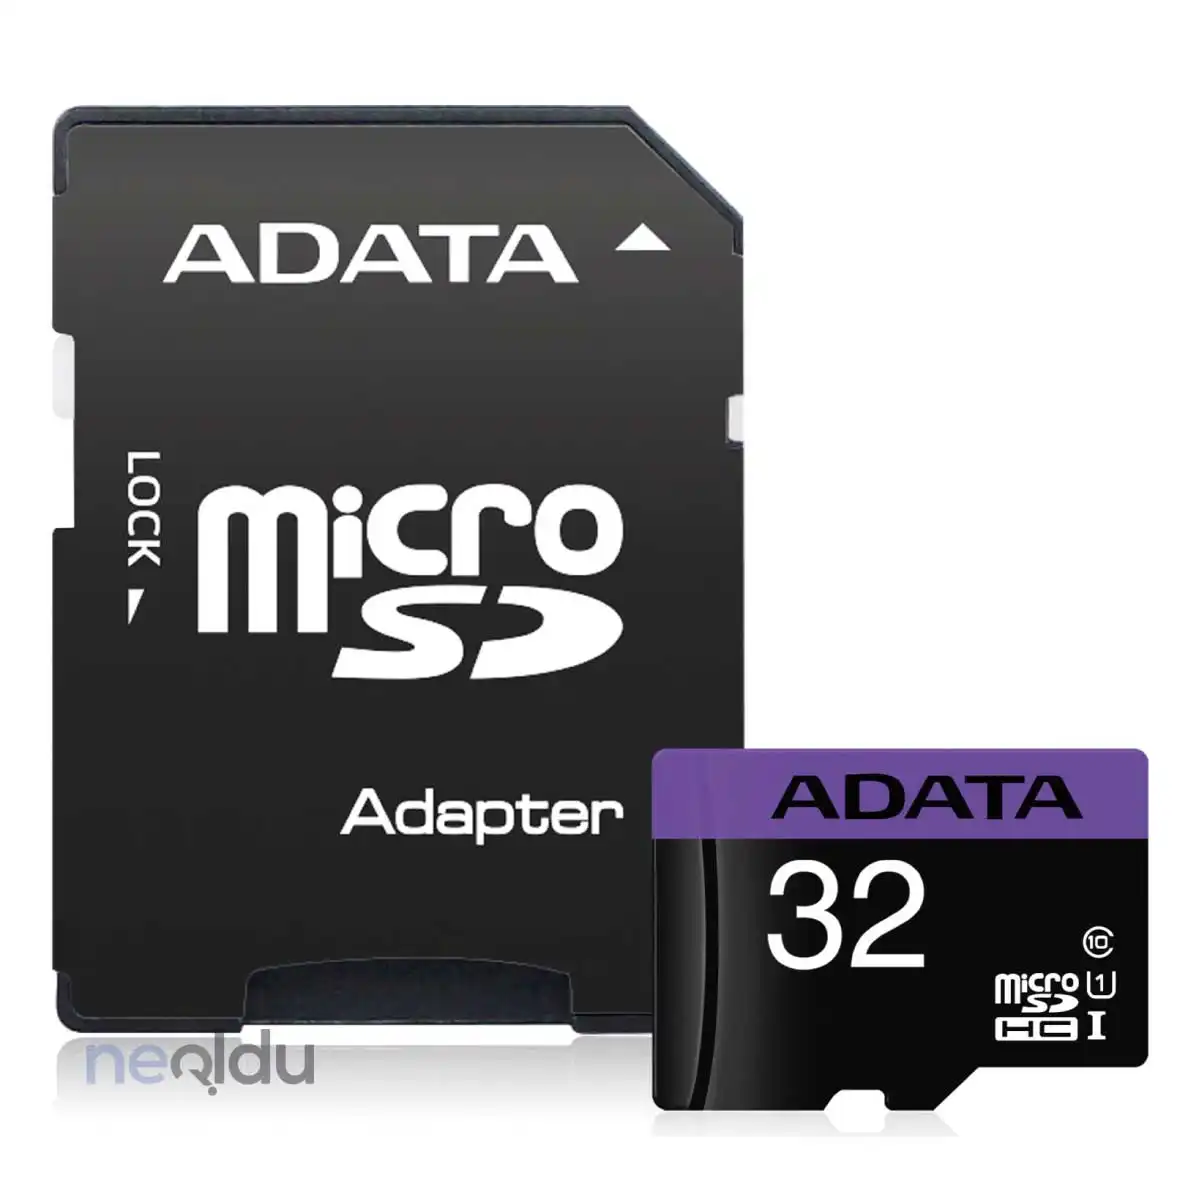 En İyi Micro SD Kart